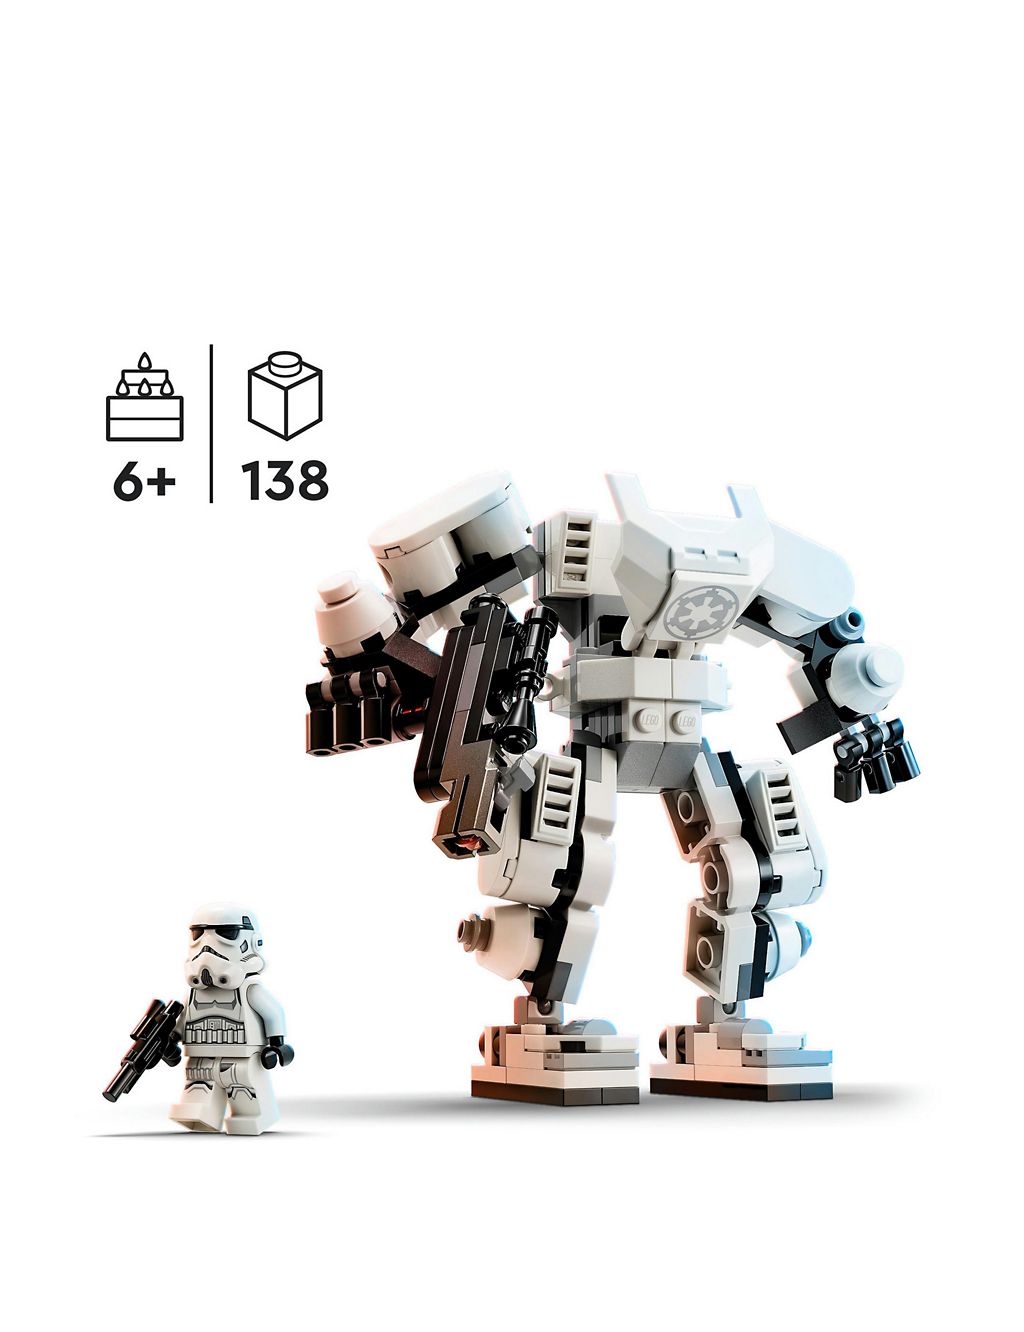 LEGO Star Wars Stormtrooper Mech Figure Set 75370 (6+ Yrs) 2 of 6